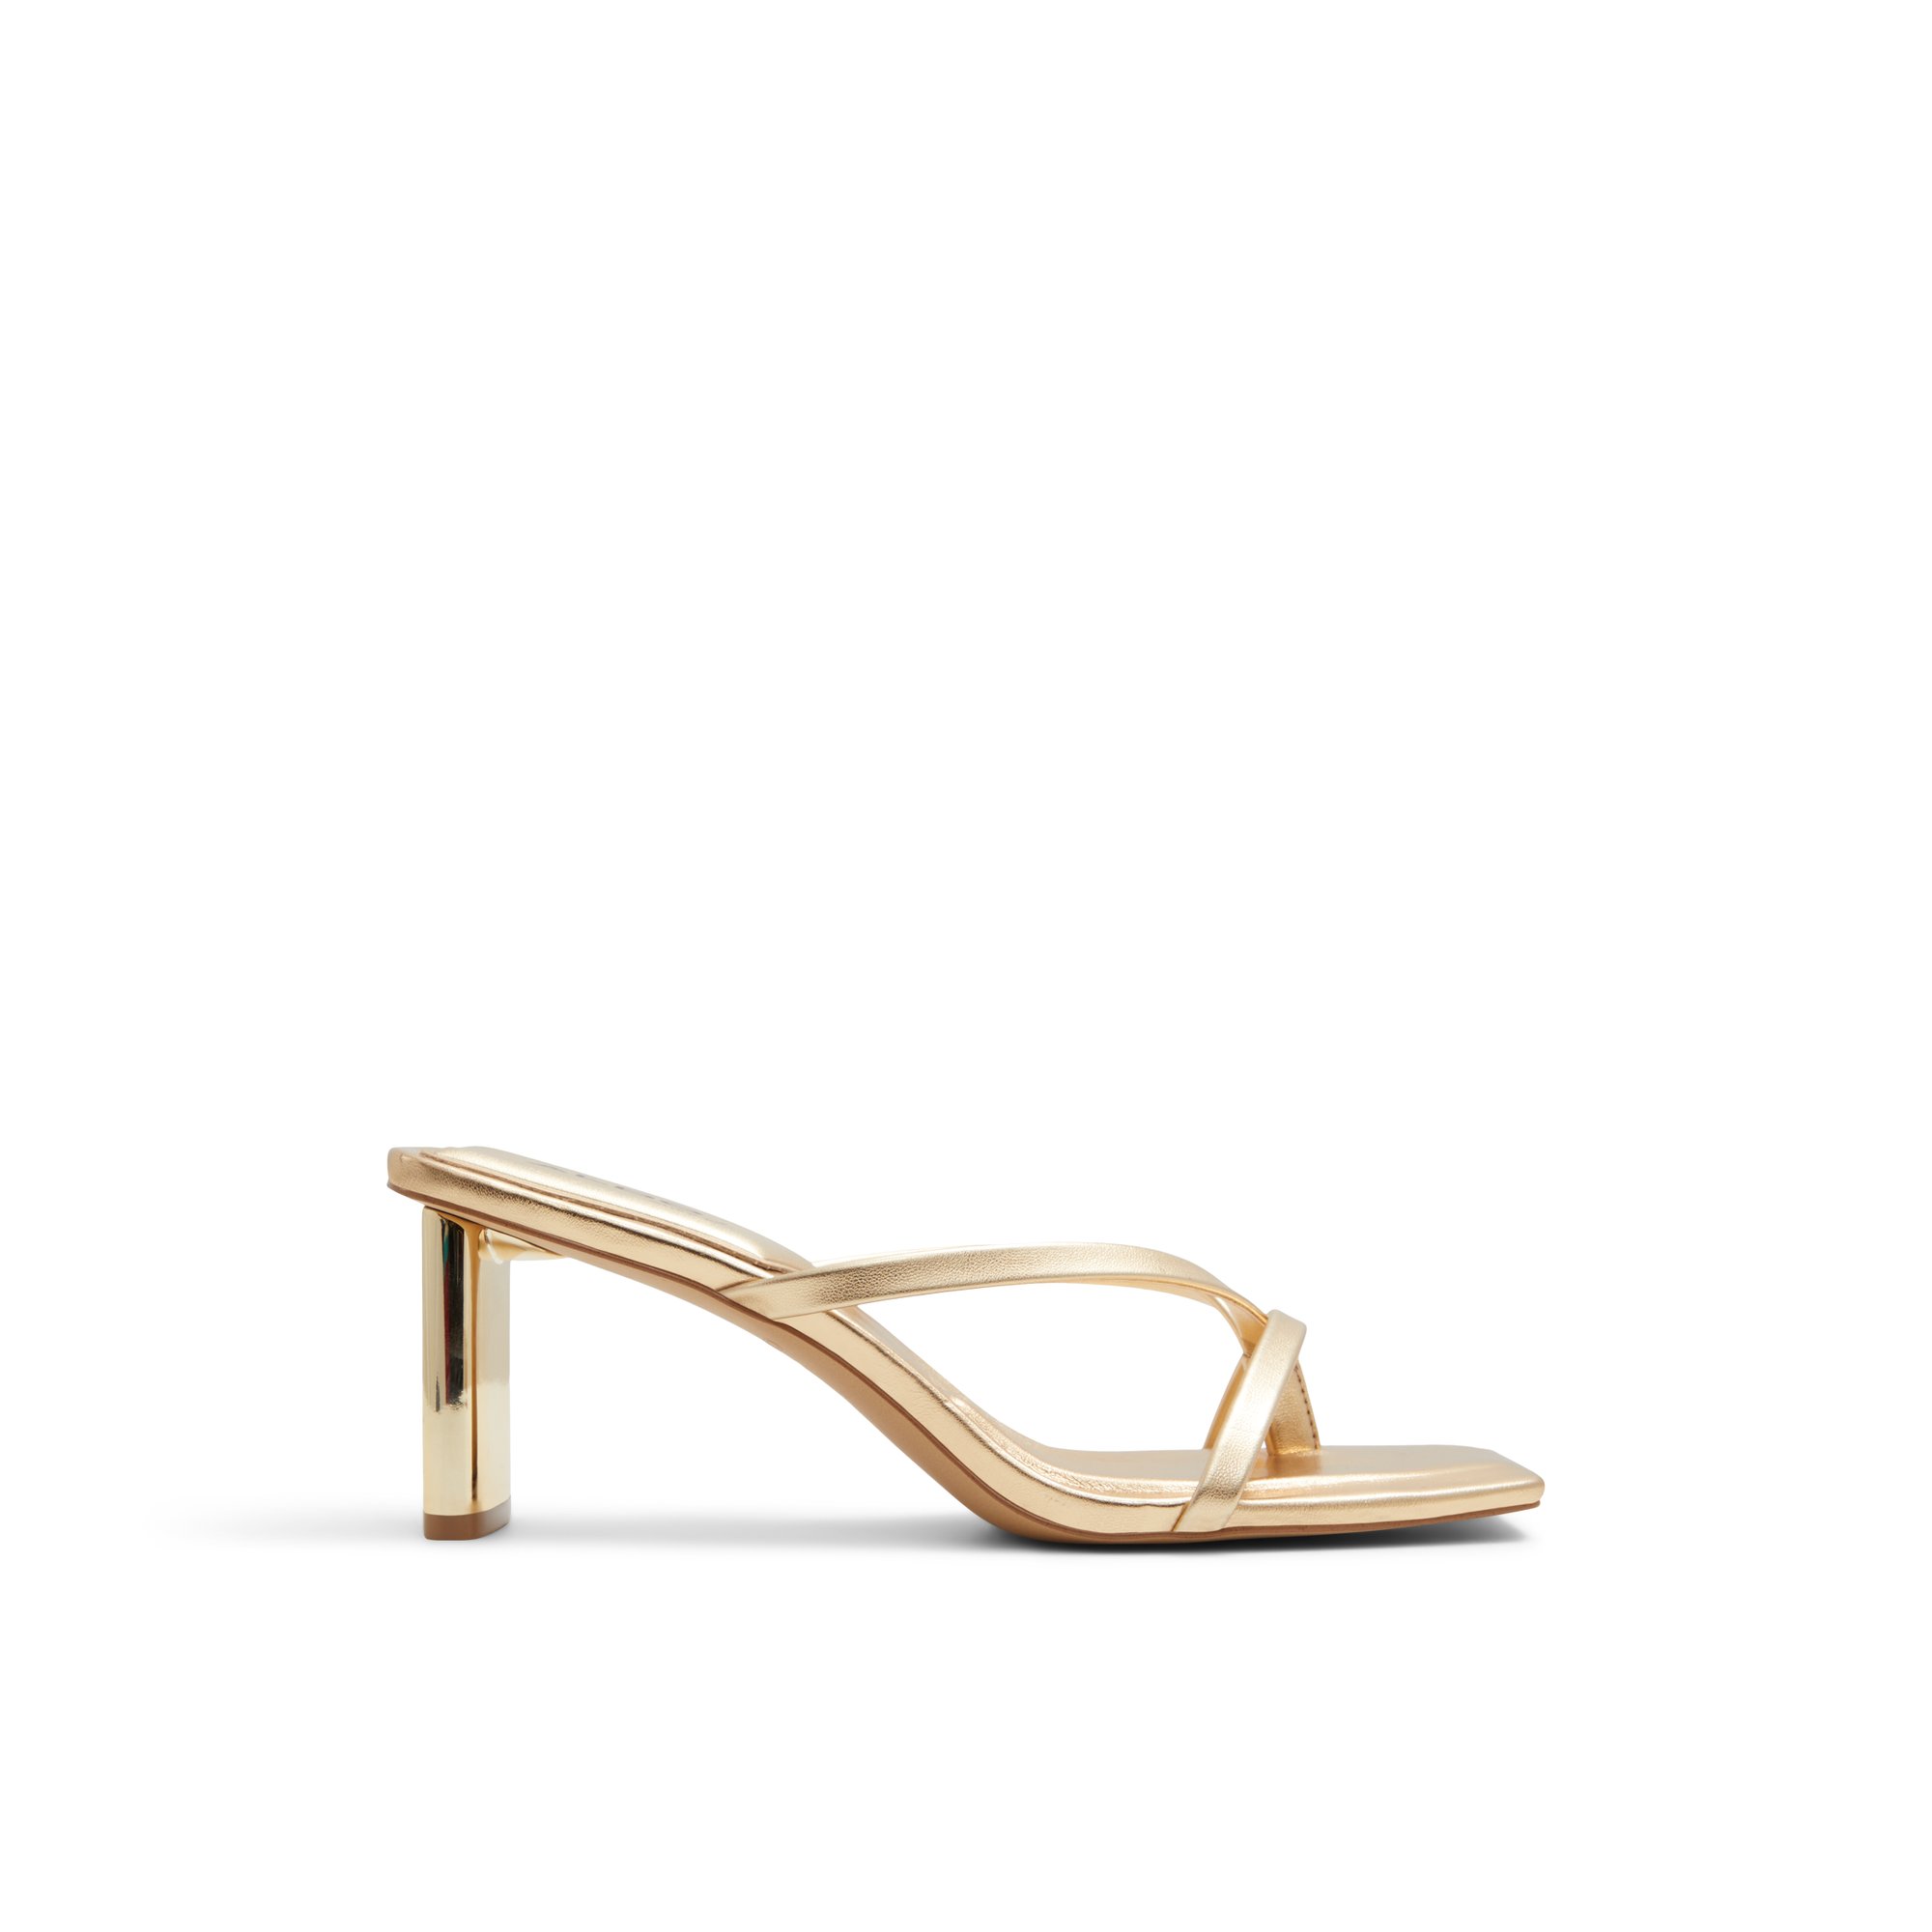 ALDO Sanne - Women's Strappy Sandal Sandals - Gold